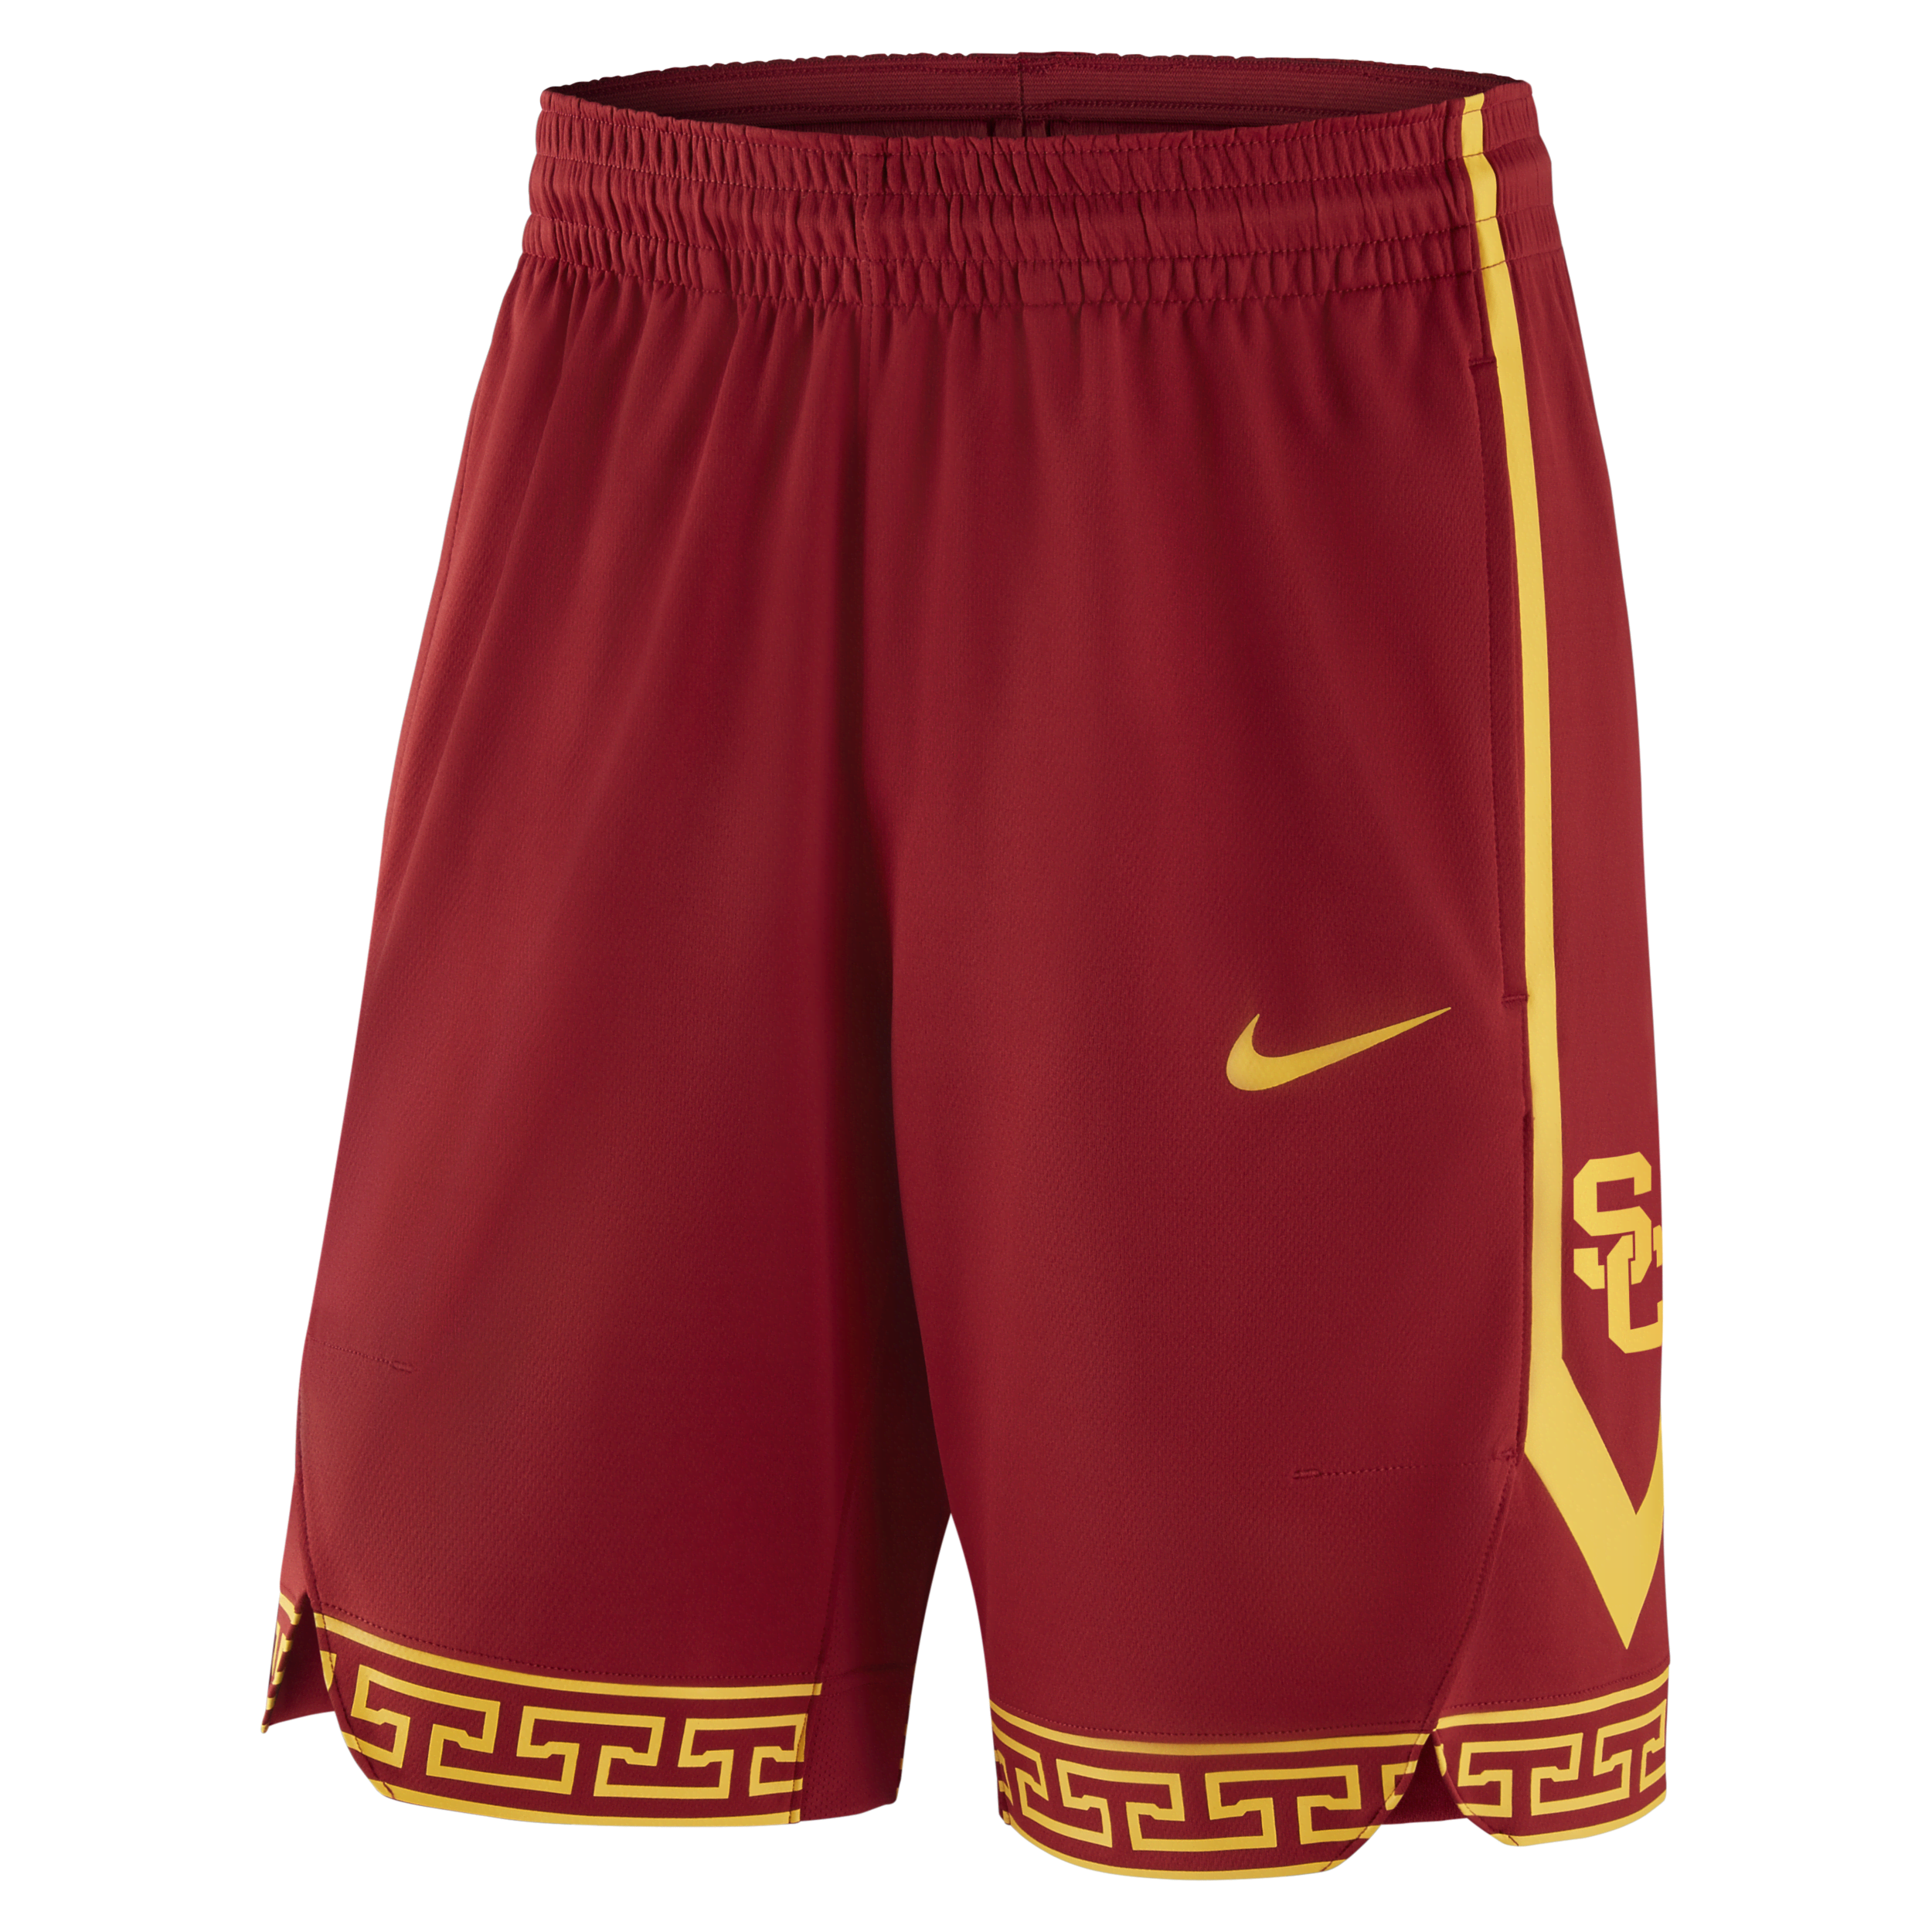 Nike College Dri-FIT (USC) Men's Replica Basketball Jersey.